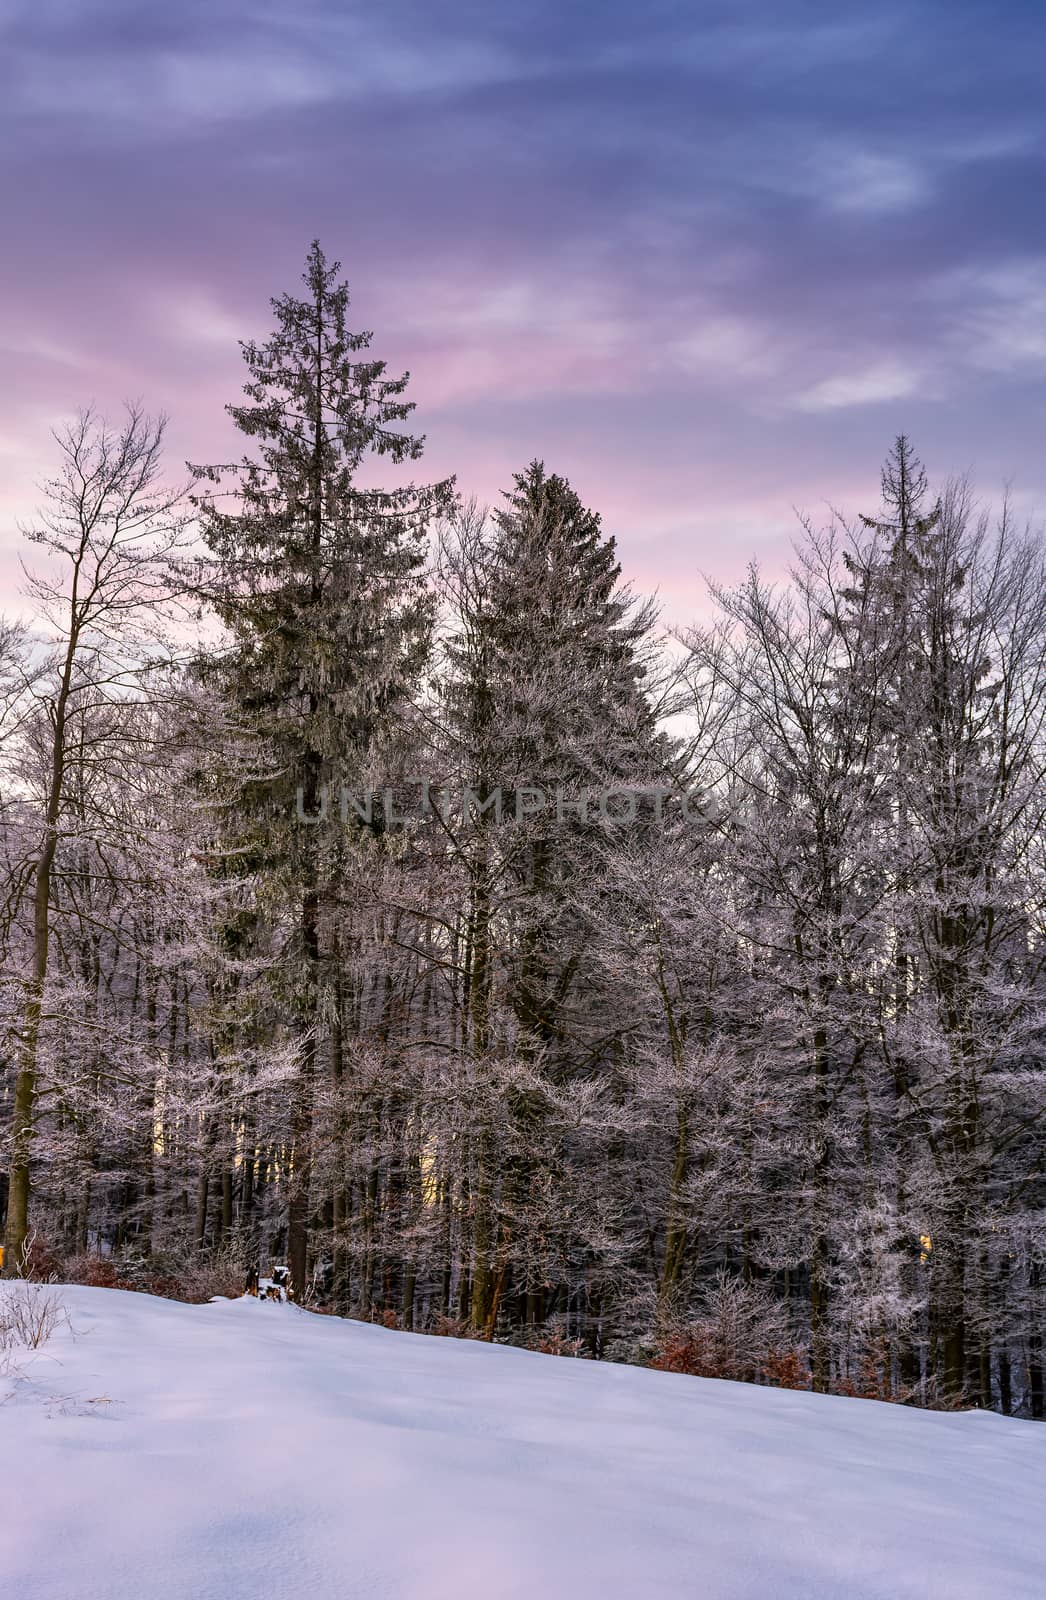 forest in hoarfrost on snowy hillside at dawn by Pellinni